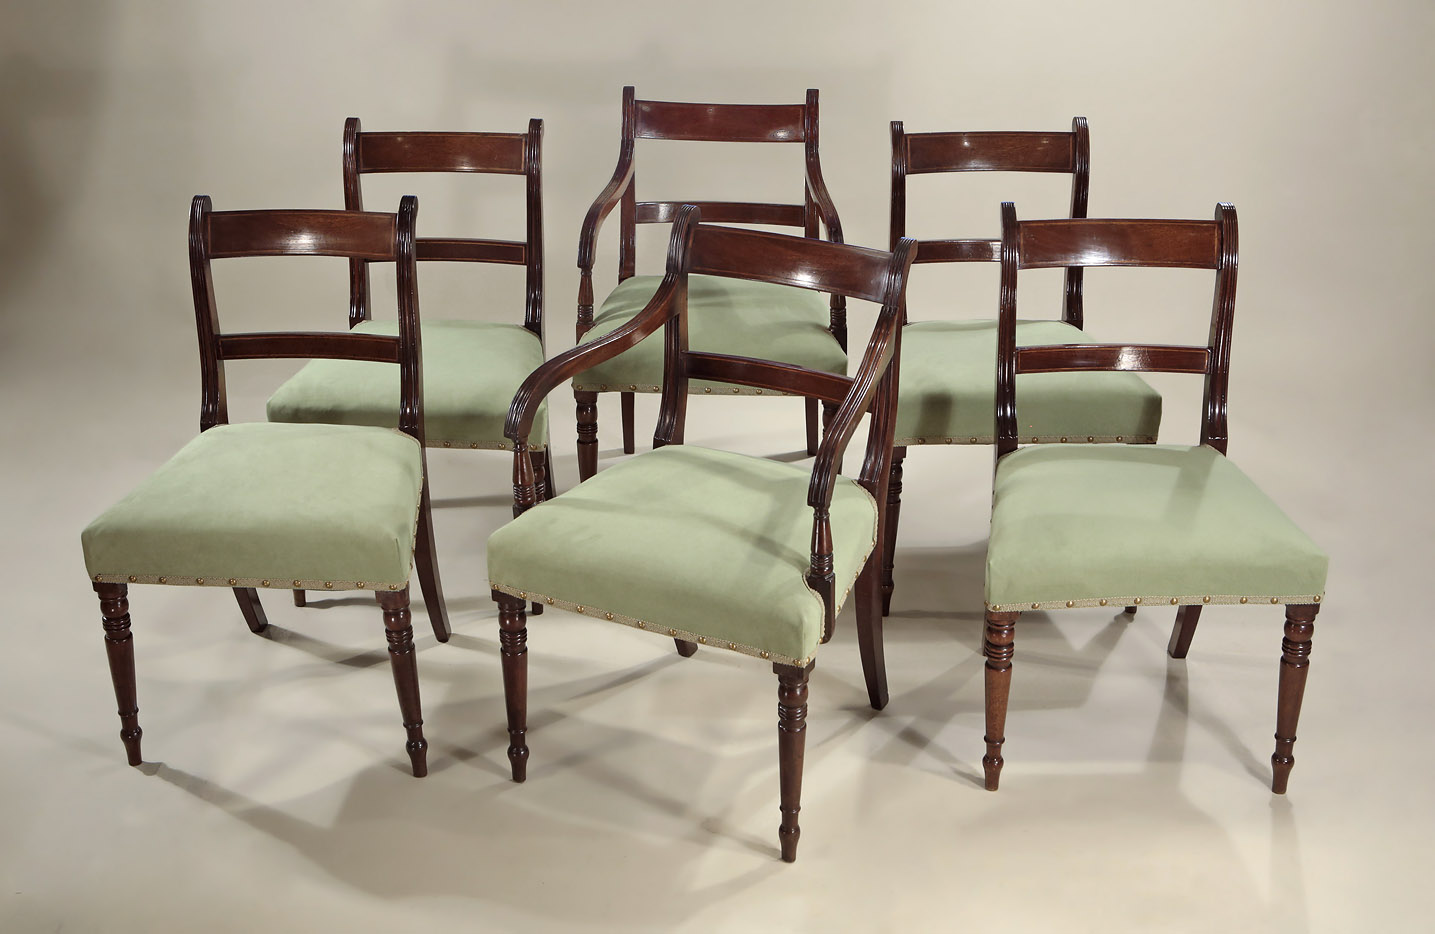 Set of Six Late Georgian Inlaid Mahogany Dining Chairs, England, c1815-20